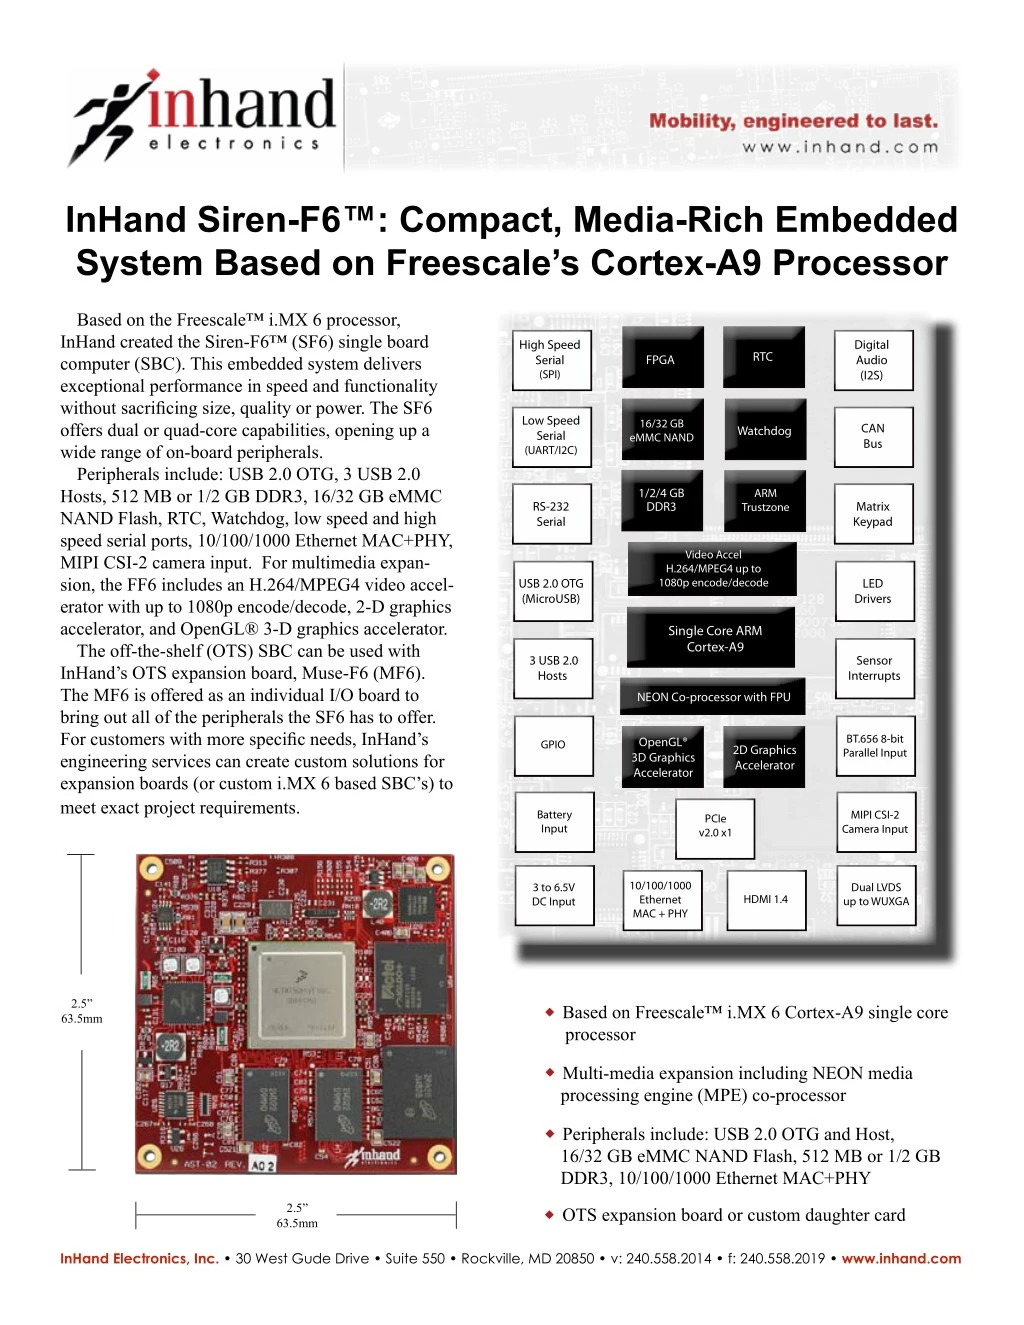 inhand siren f6 compact media rich embedded